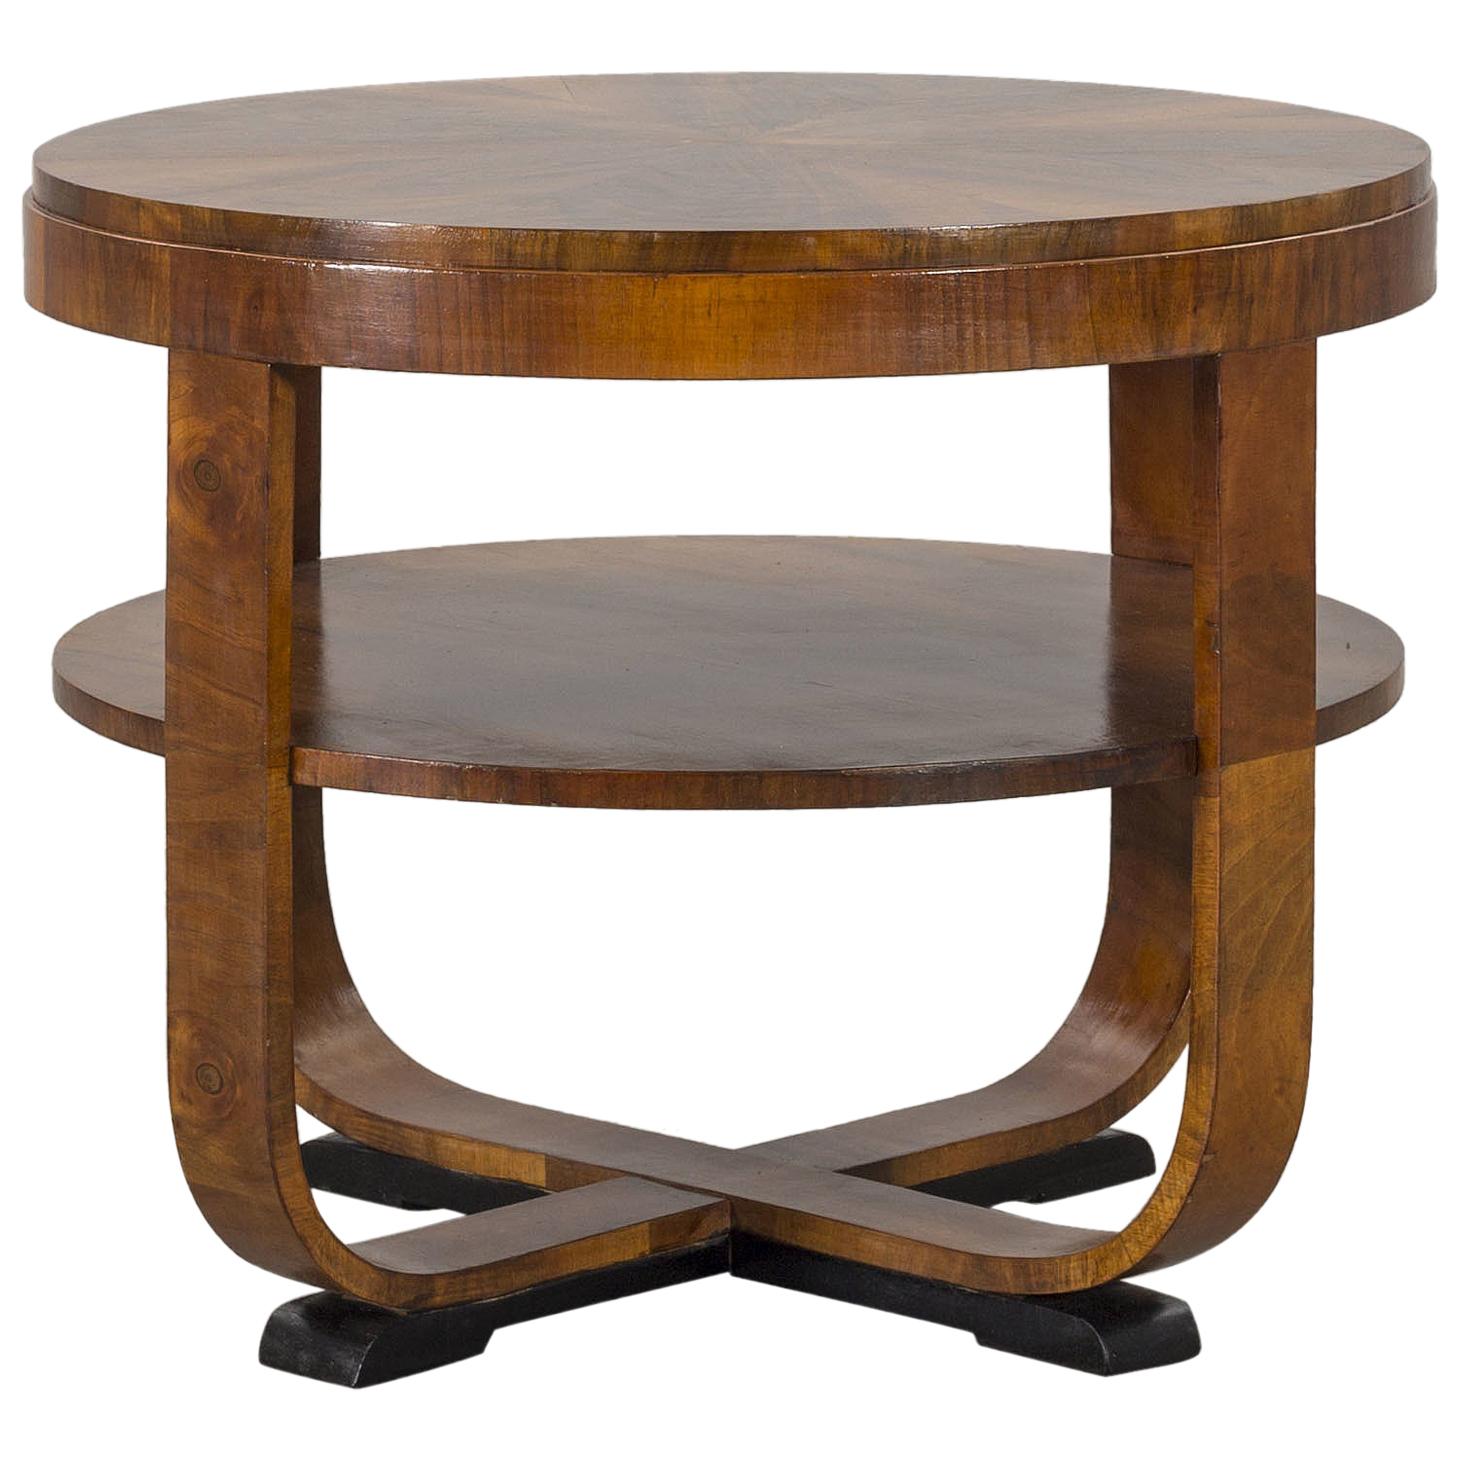 Round Walnut Art Deco Style Side Table with Ebonized Feet